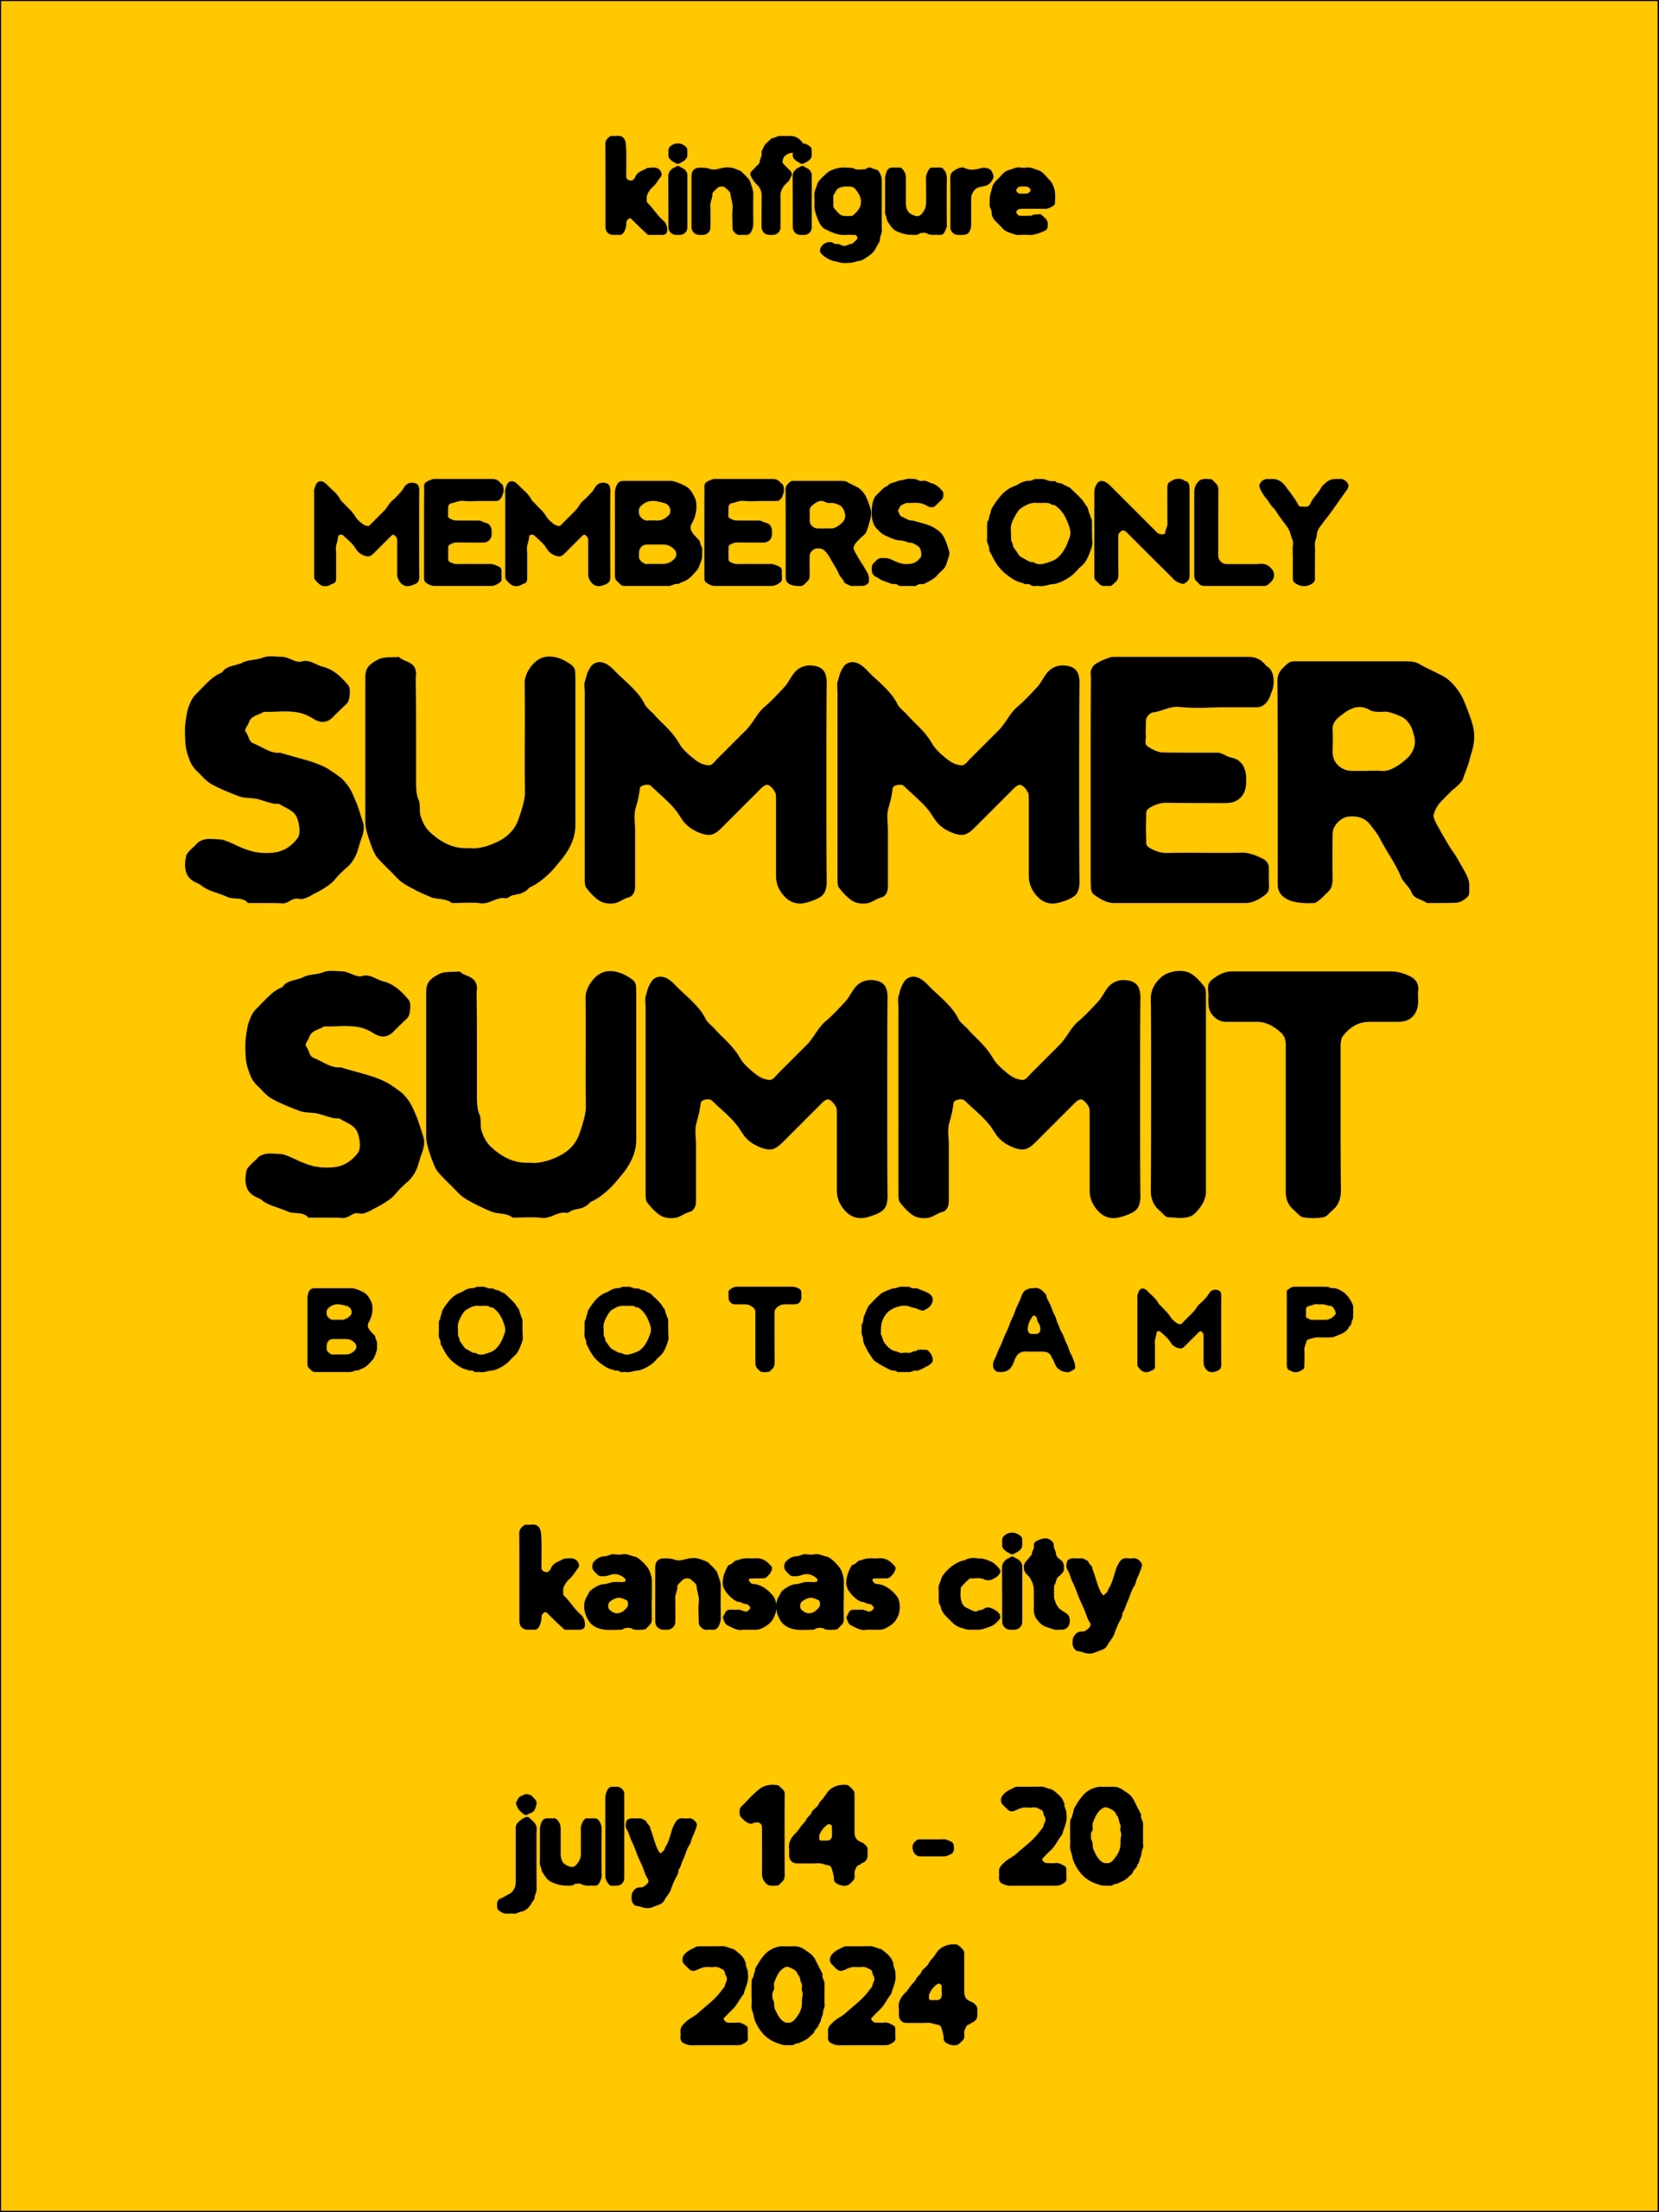 KinFigure Summer Summit Bootcamp